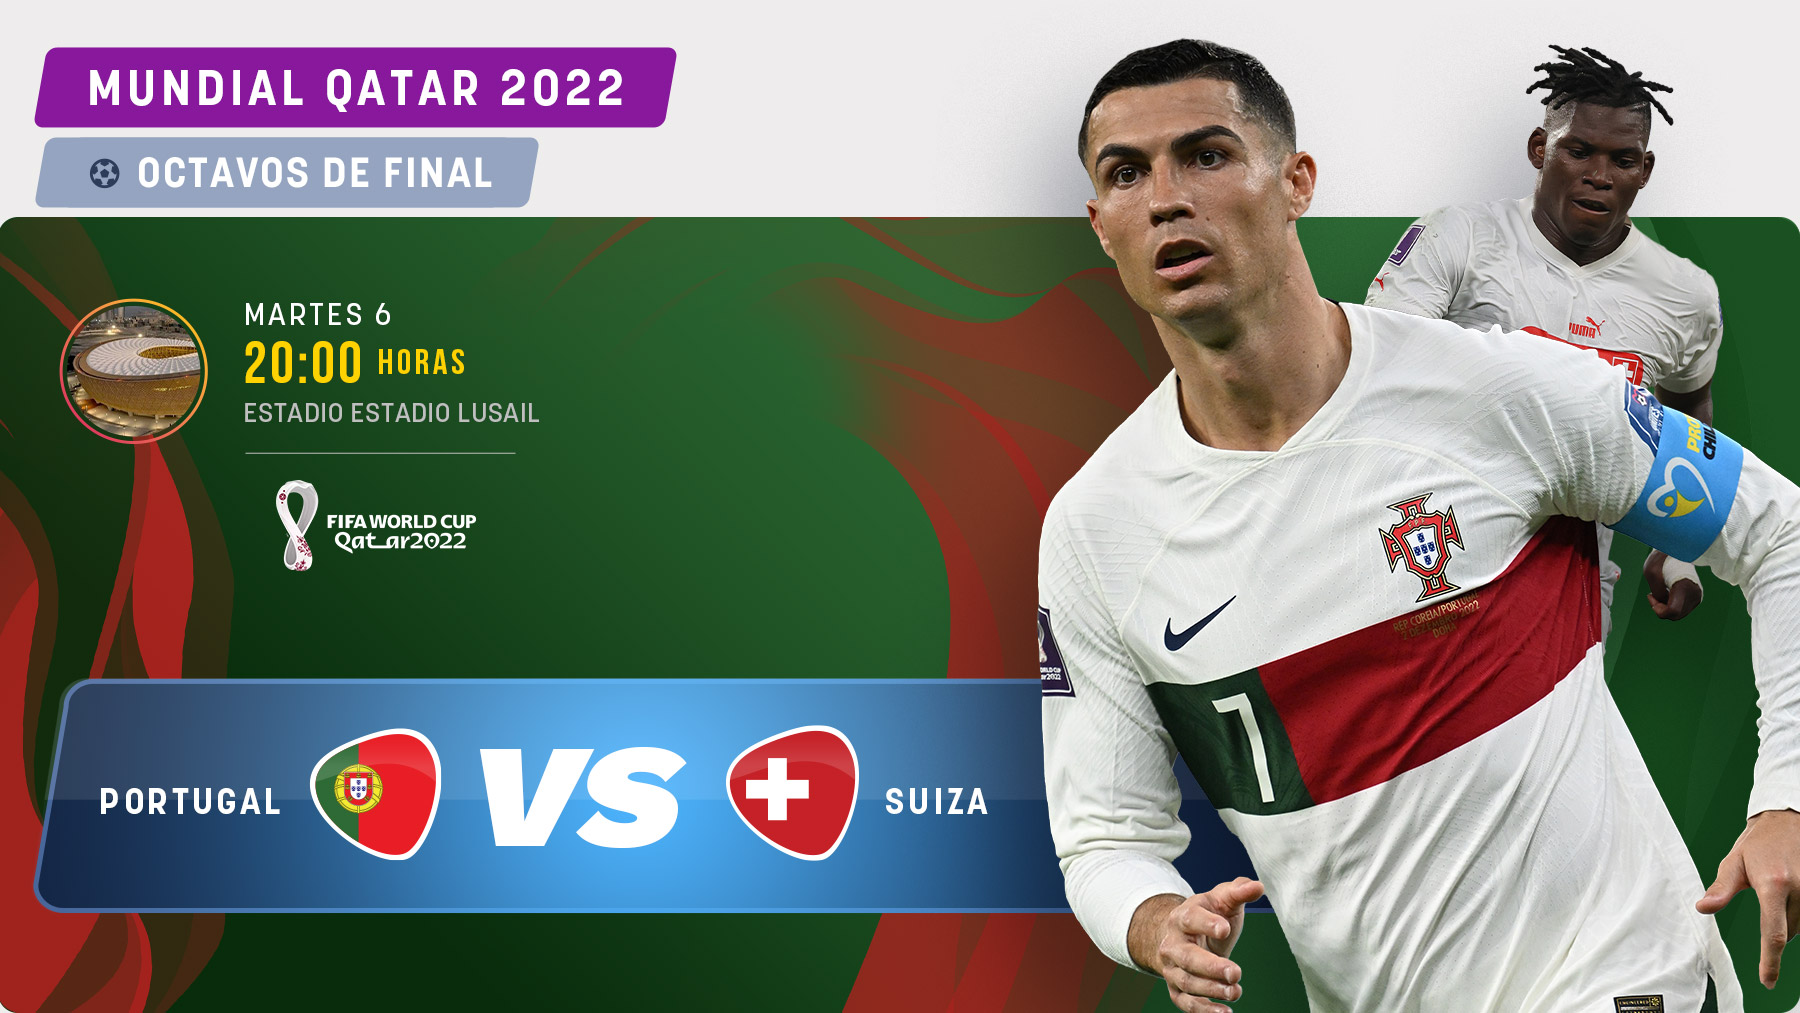 Portugal-Suiza: final para Cristiano